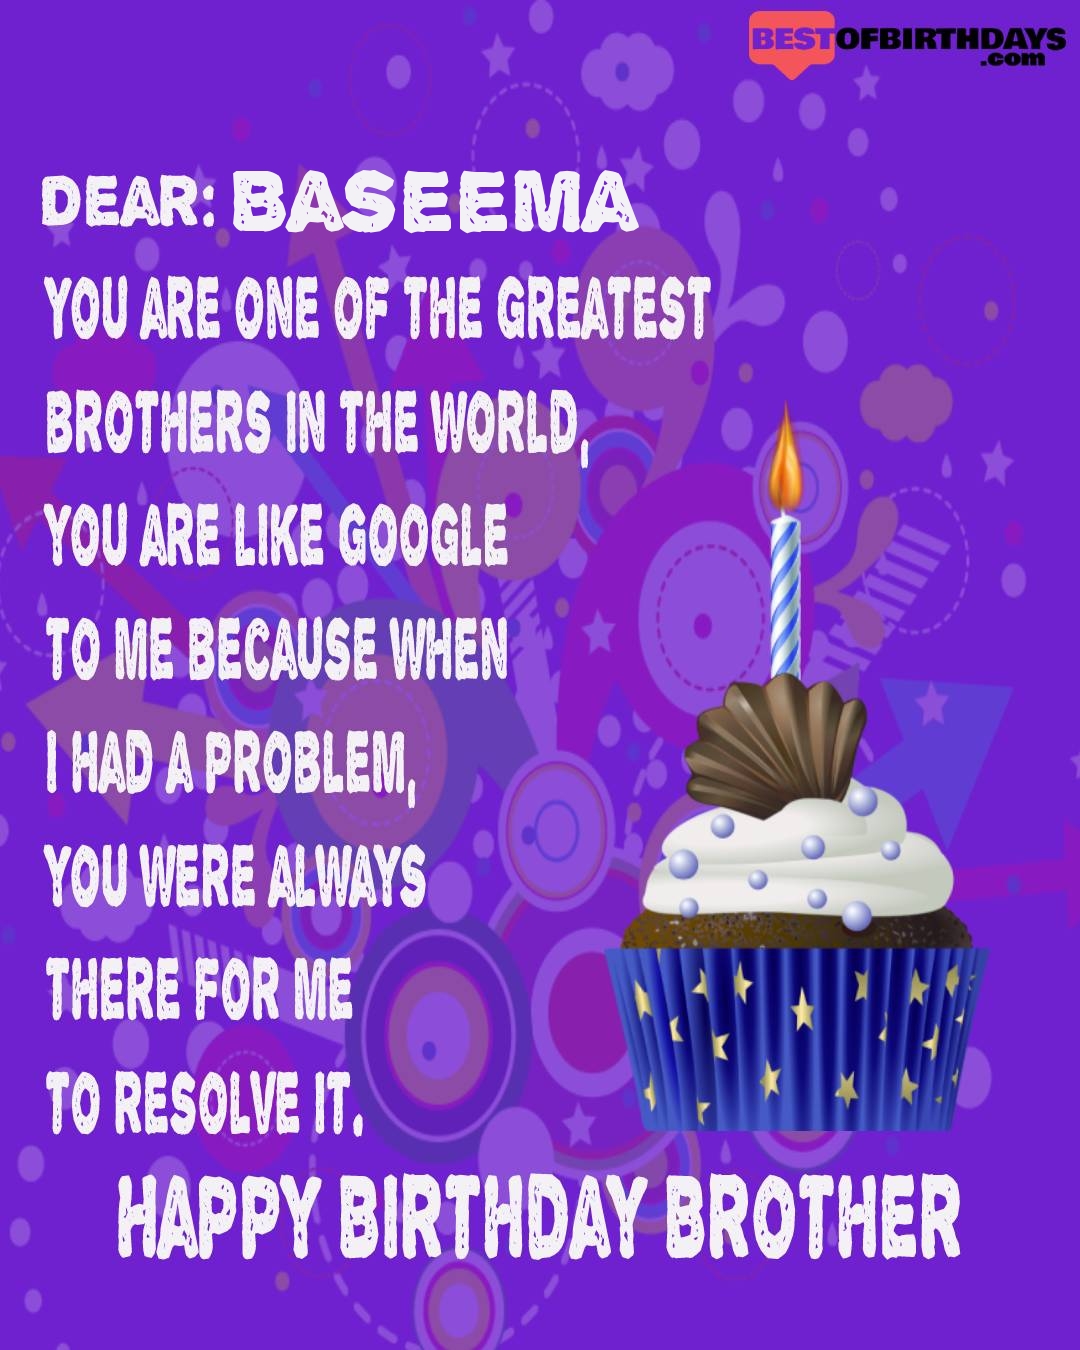 Happy birthday baseema bhai brother bro